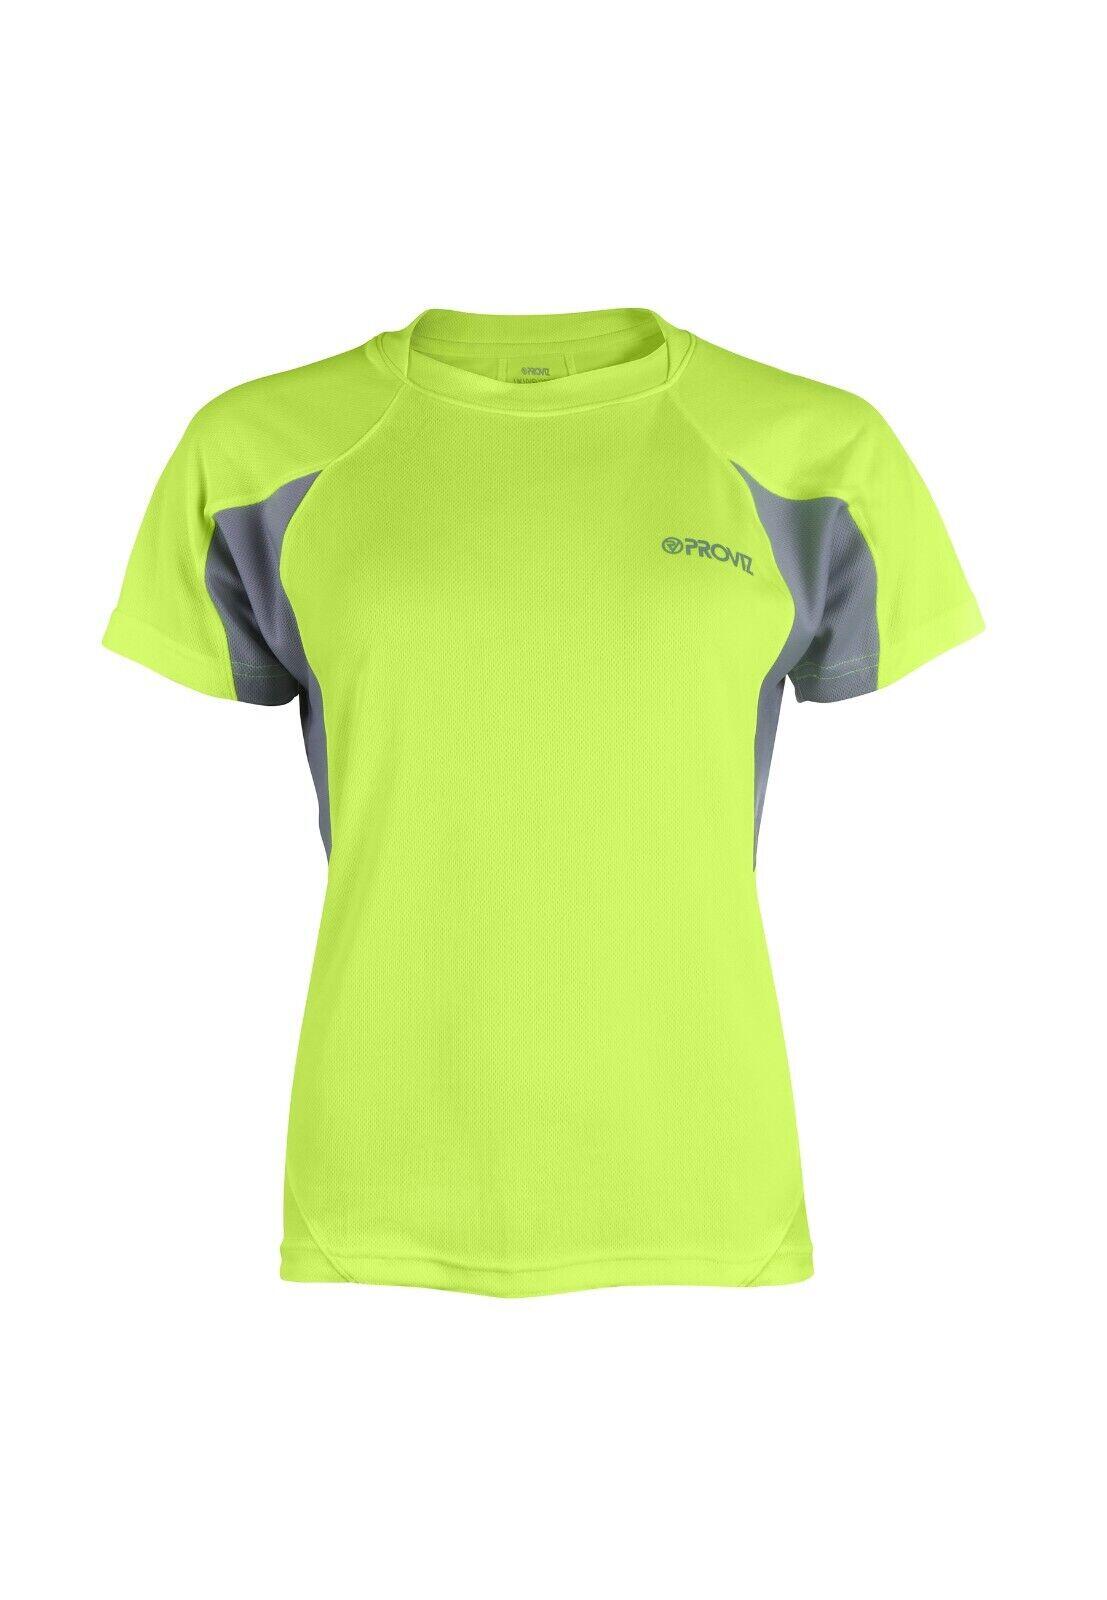 Proviz Classic Womens Sports T-Shirt Short Sleeve Reflective Activewear Top 3/6